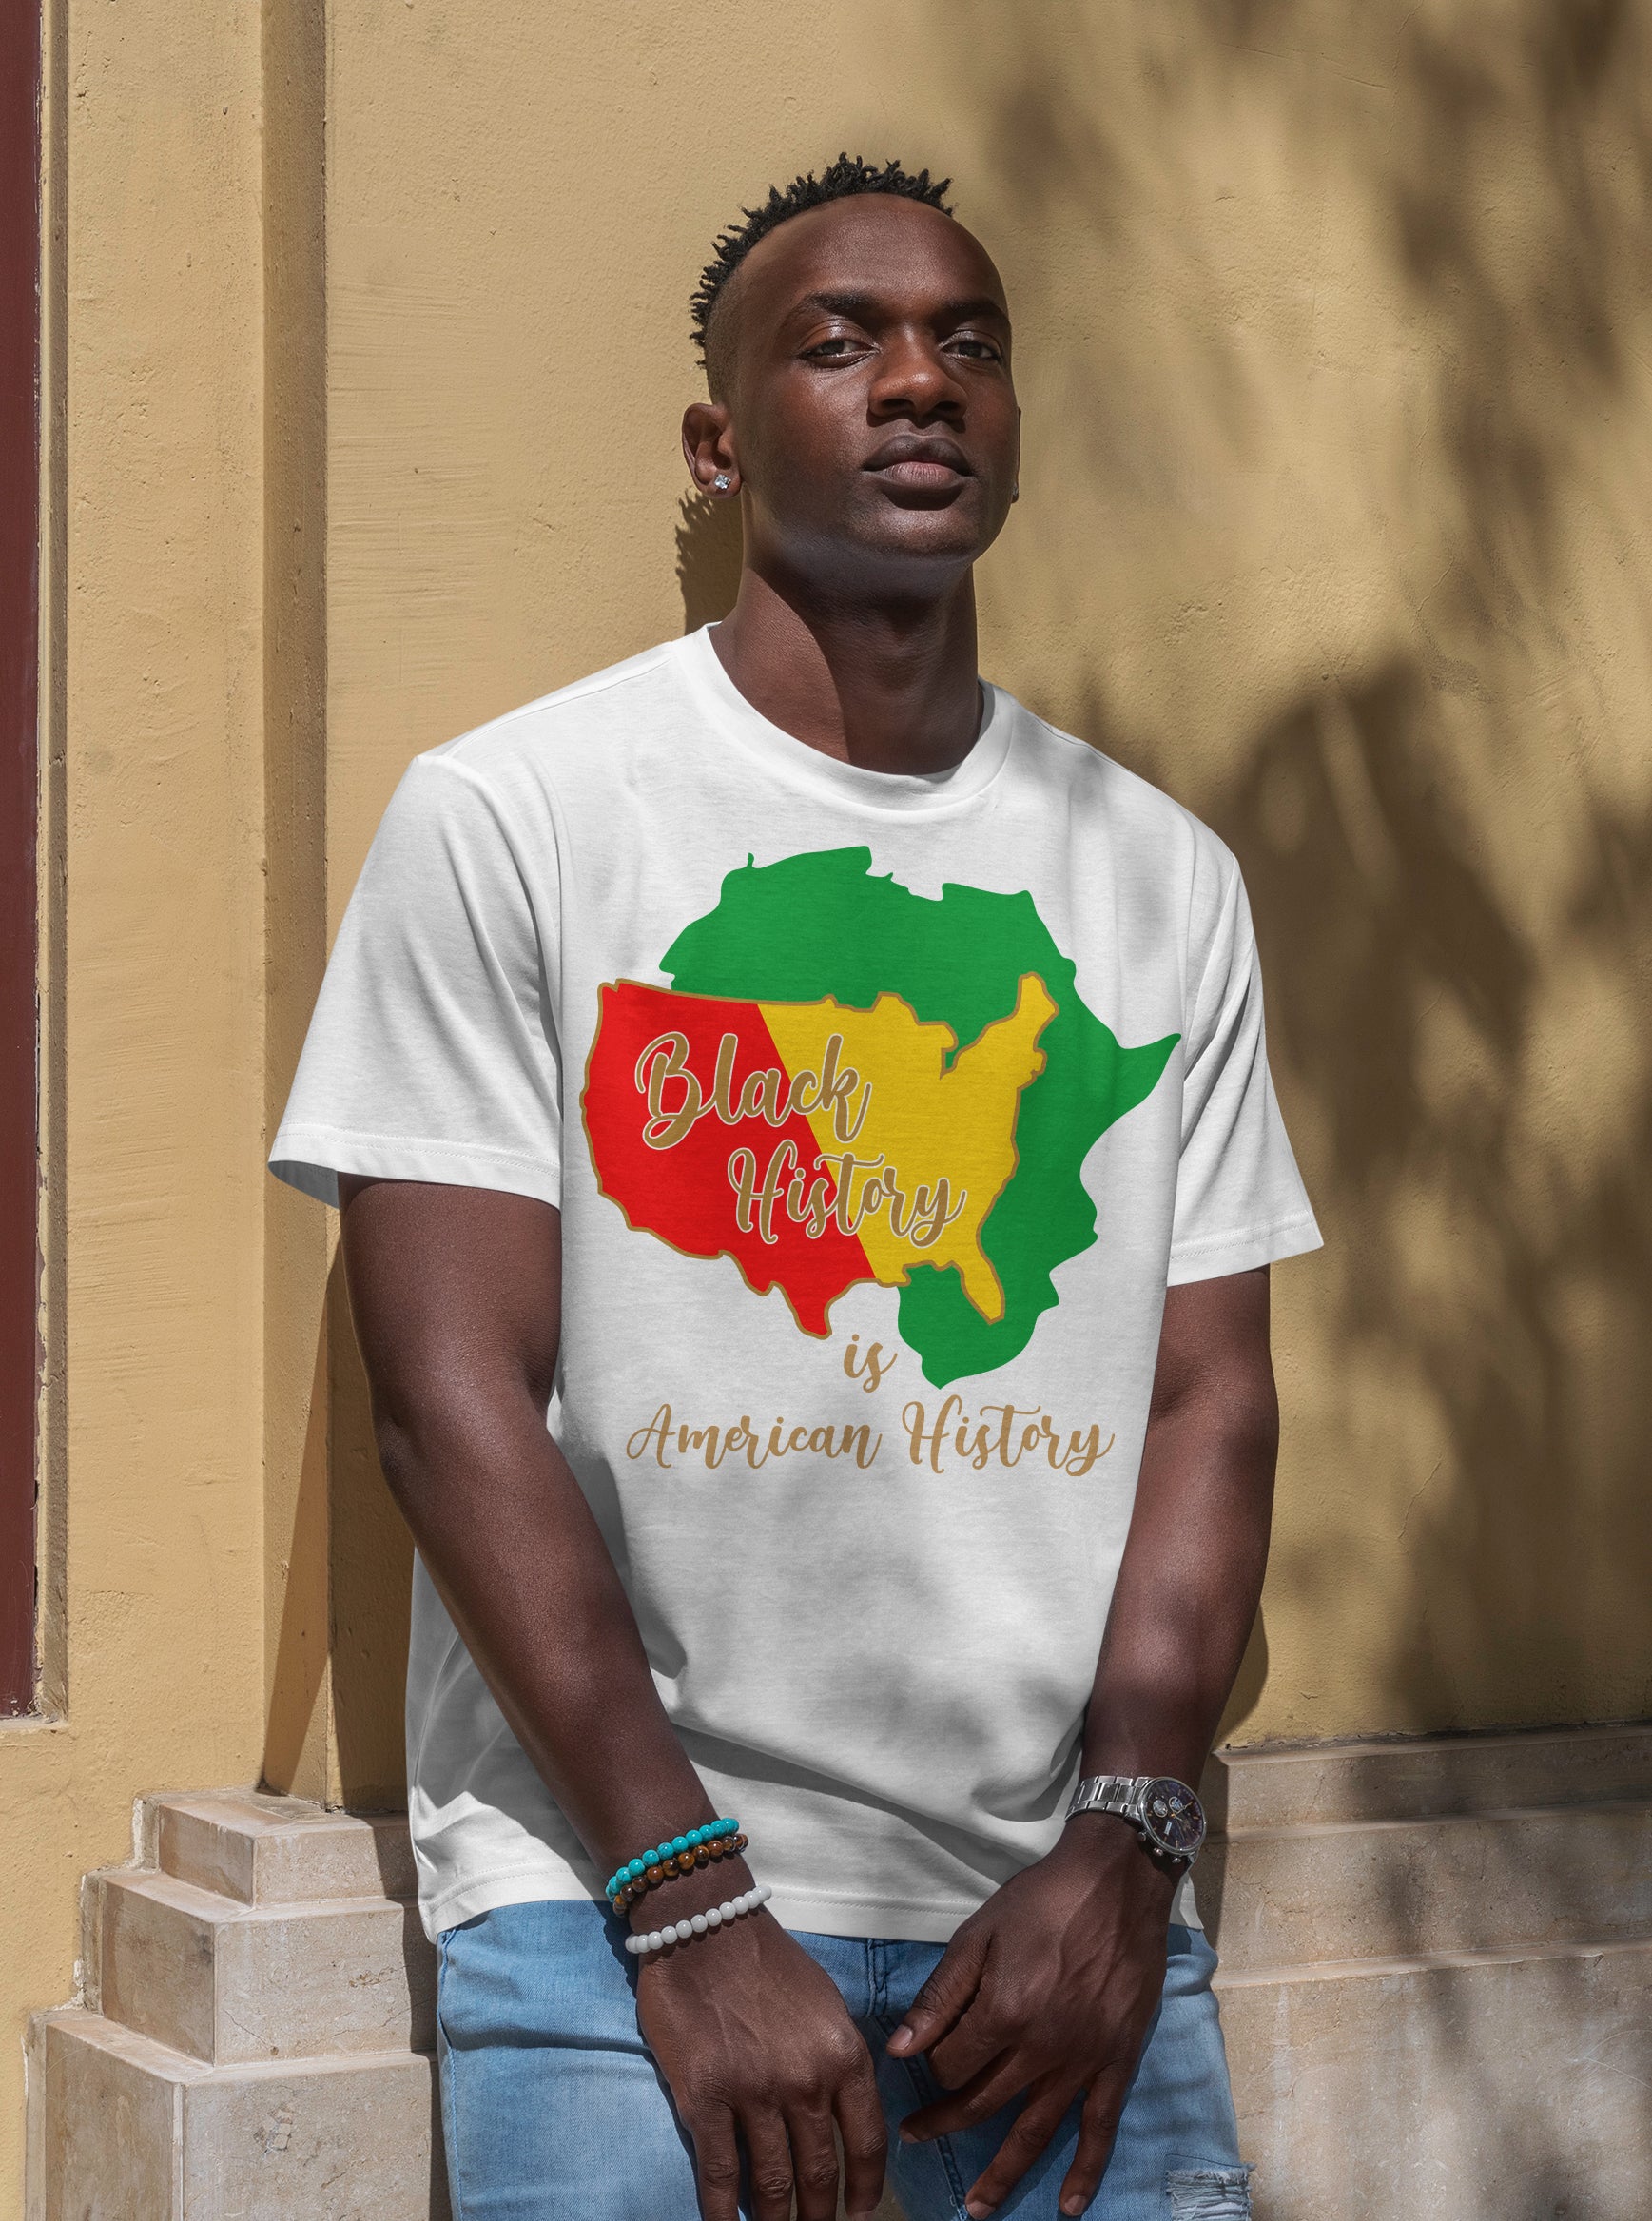 Black History is American History T-Shirt